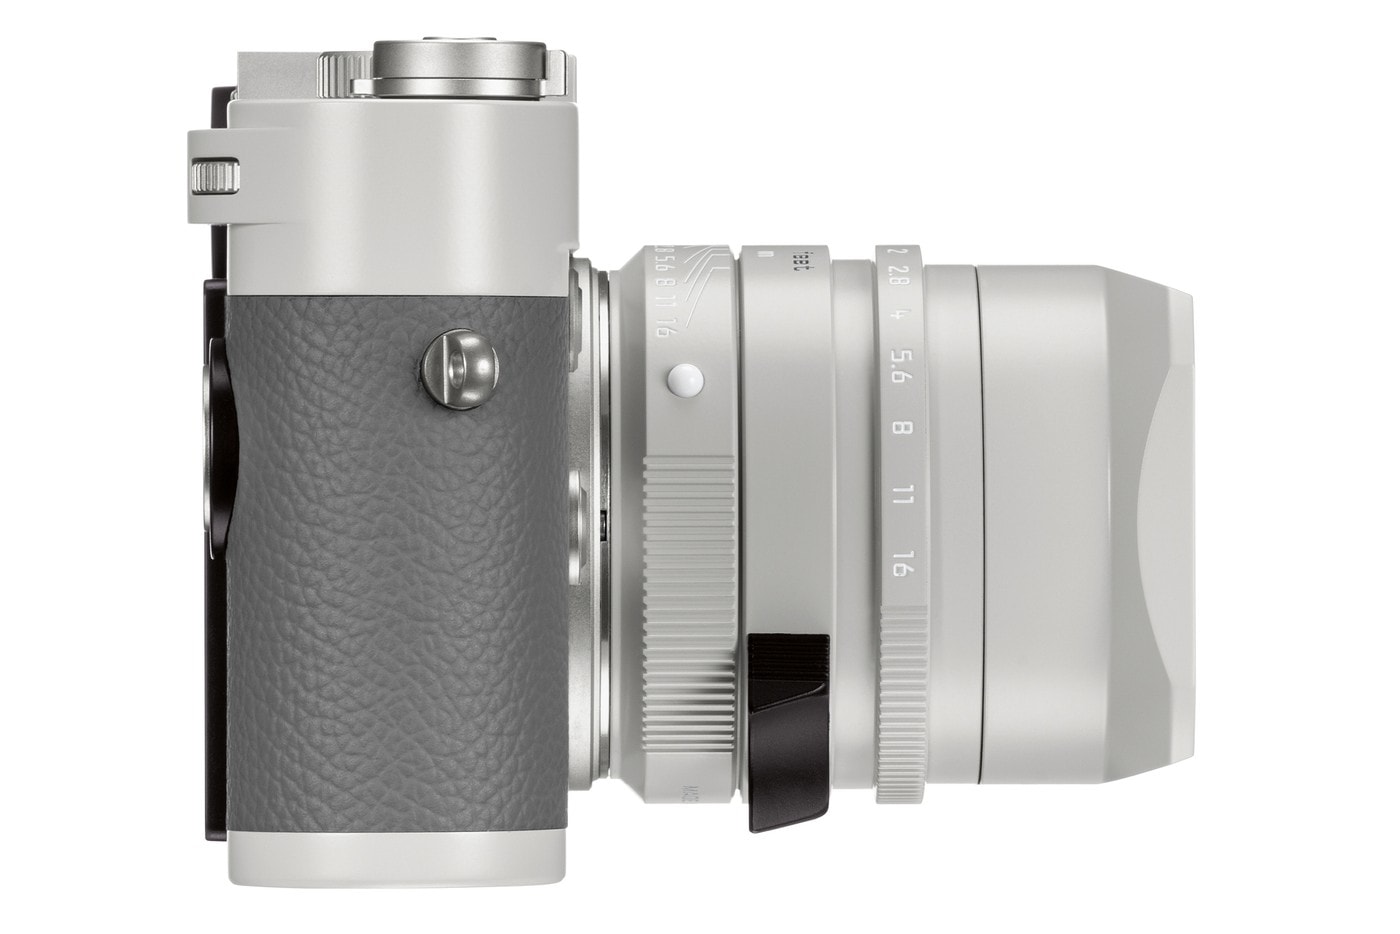 Leica x HODINKEE 限量聯乘別注「Ghost Edition」M10-P 相機正式發佈